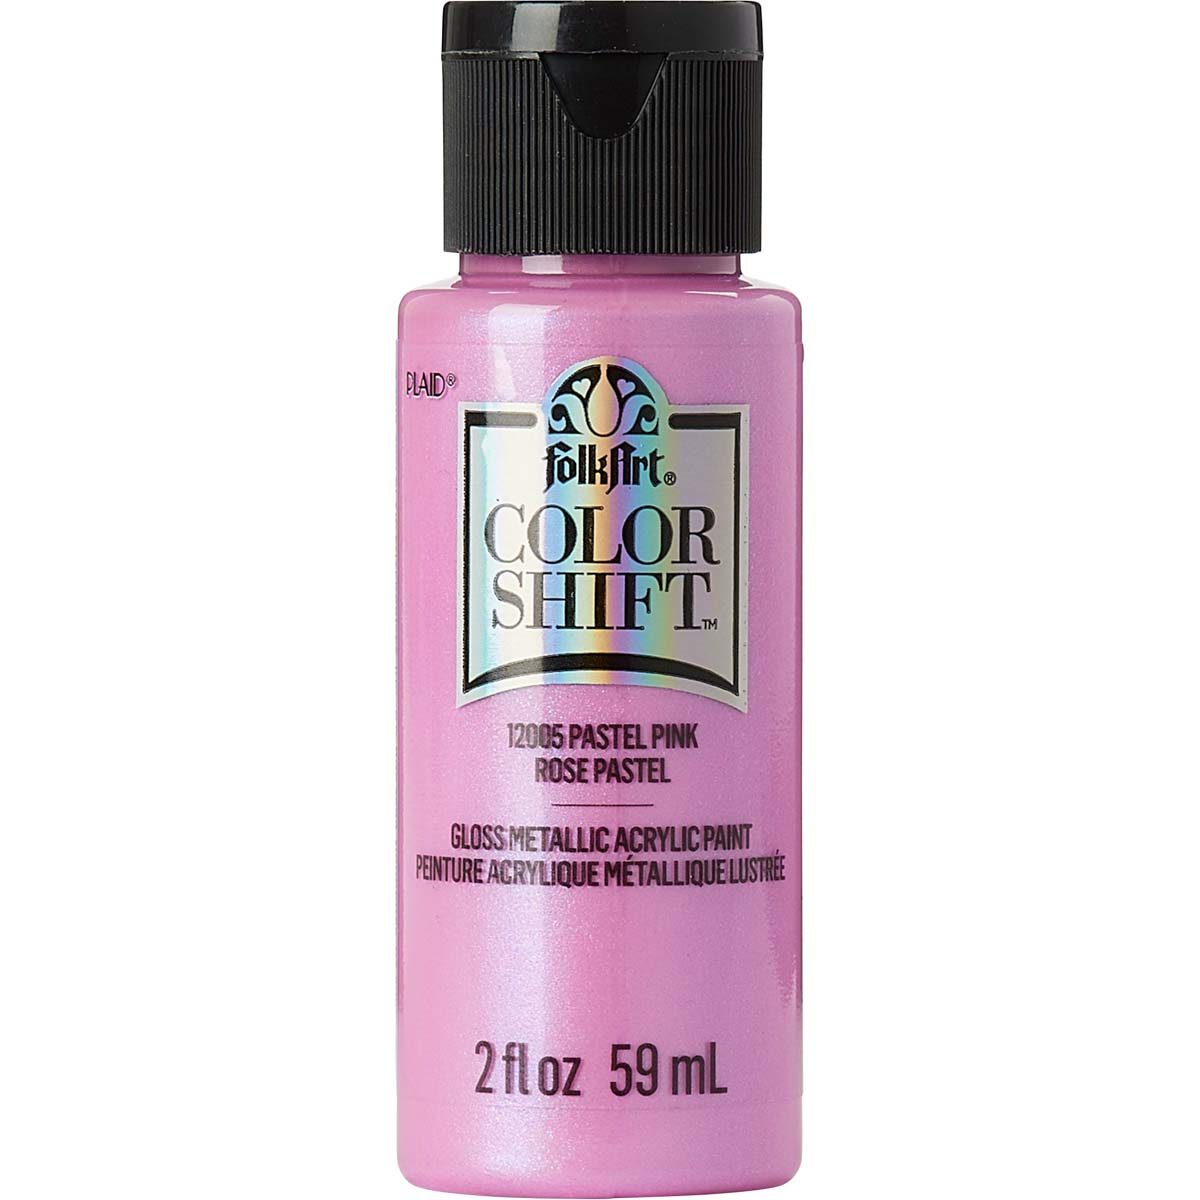 FolkArt ® Color Shift™ Acrylic Paint - Pastel Pink, 2 oz. - 12005